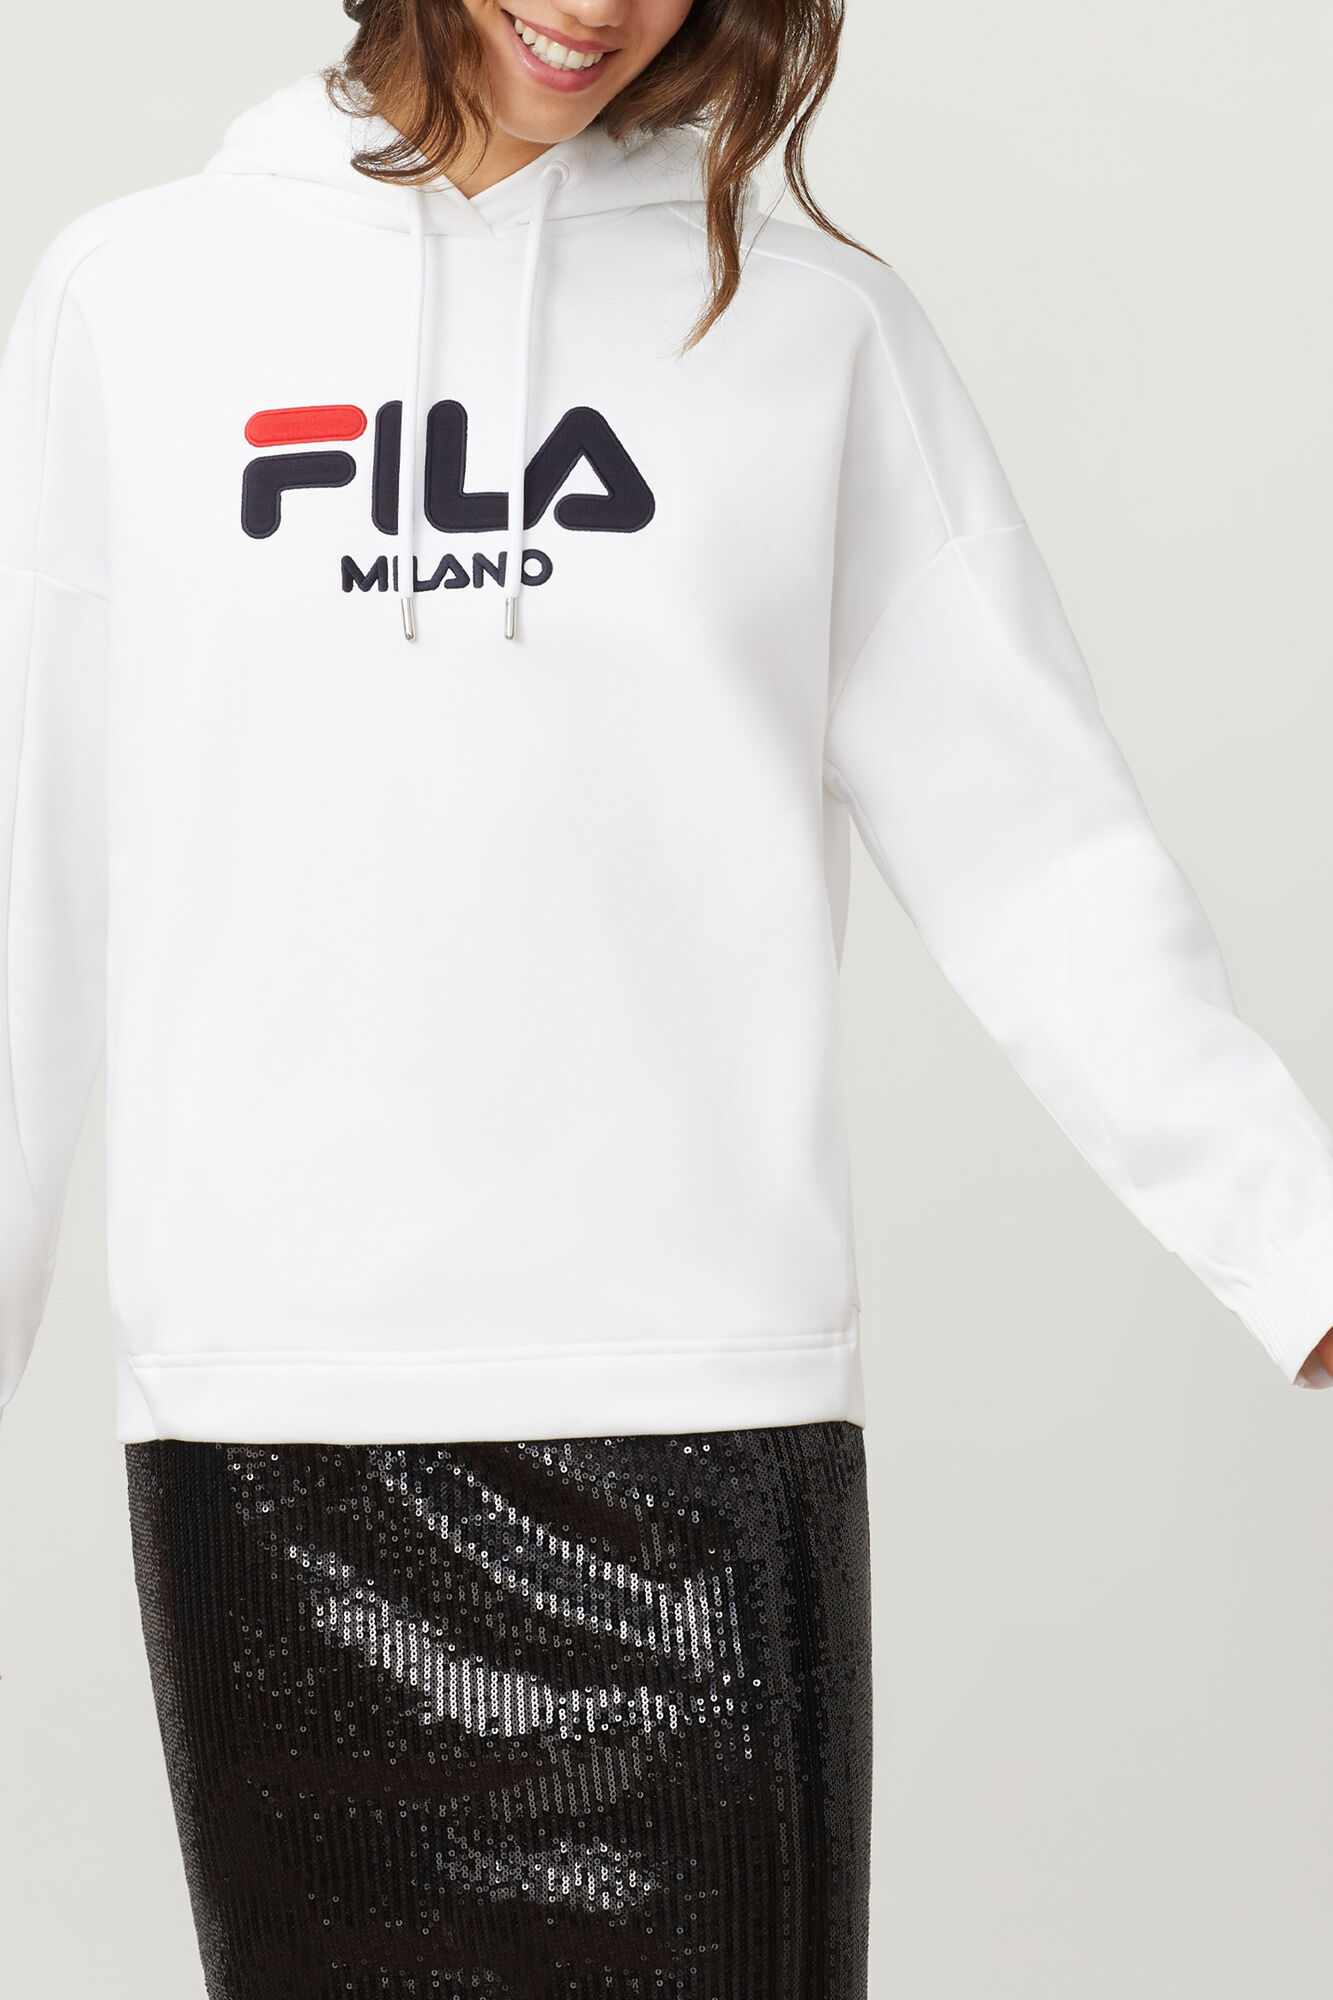 Fila Milano Hoodie - Sweatshirts & Hoodies | Fila